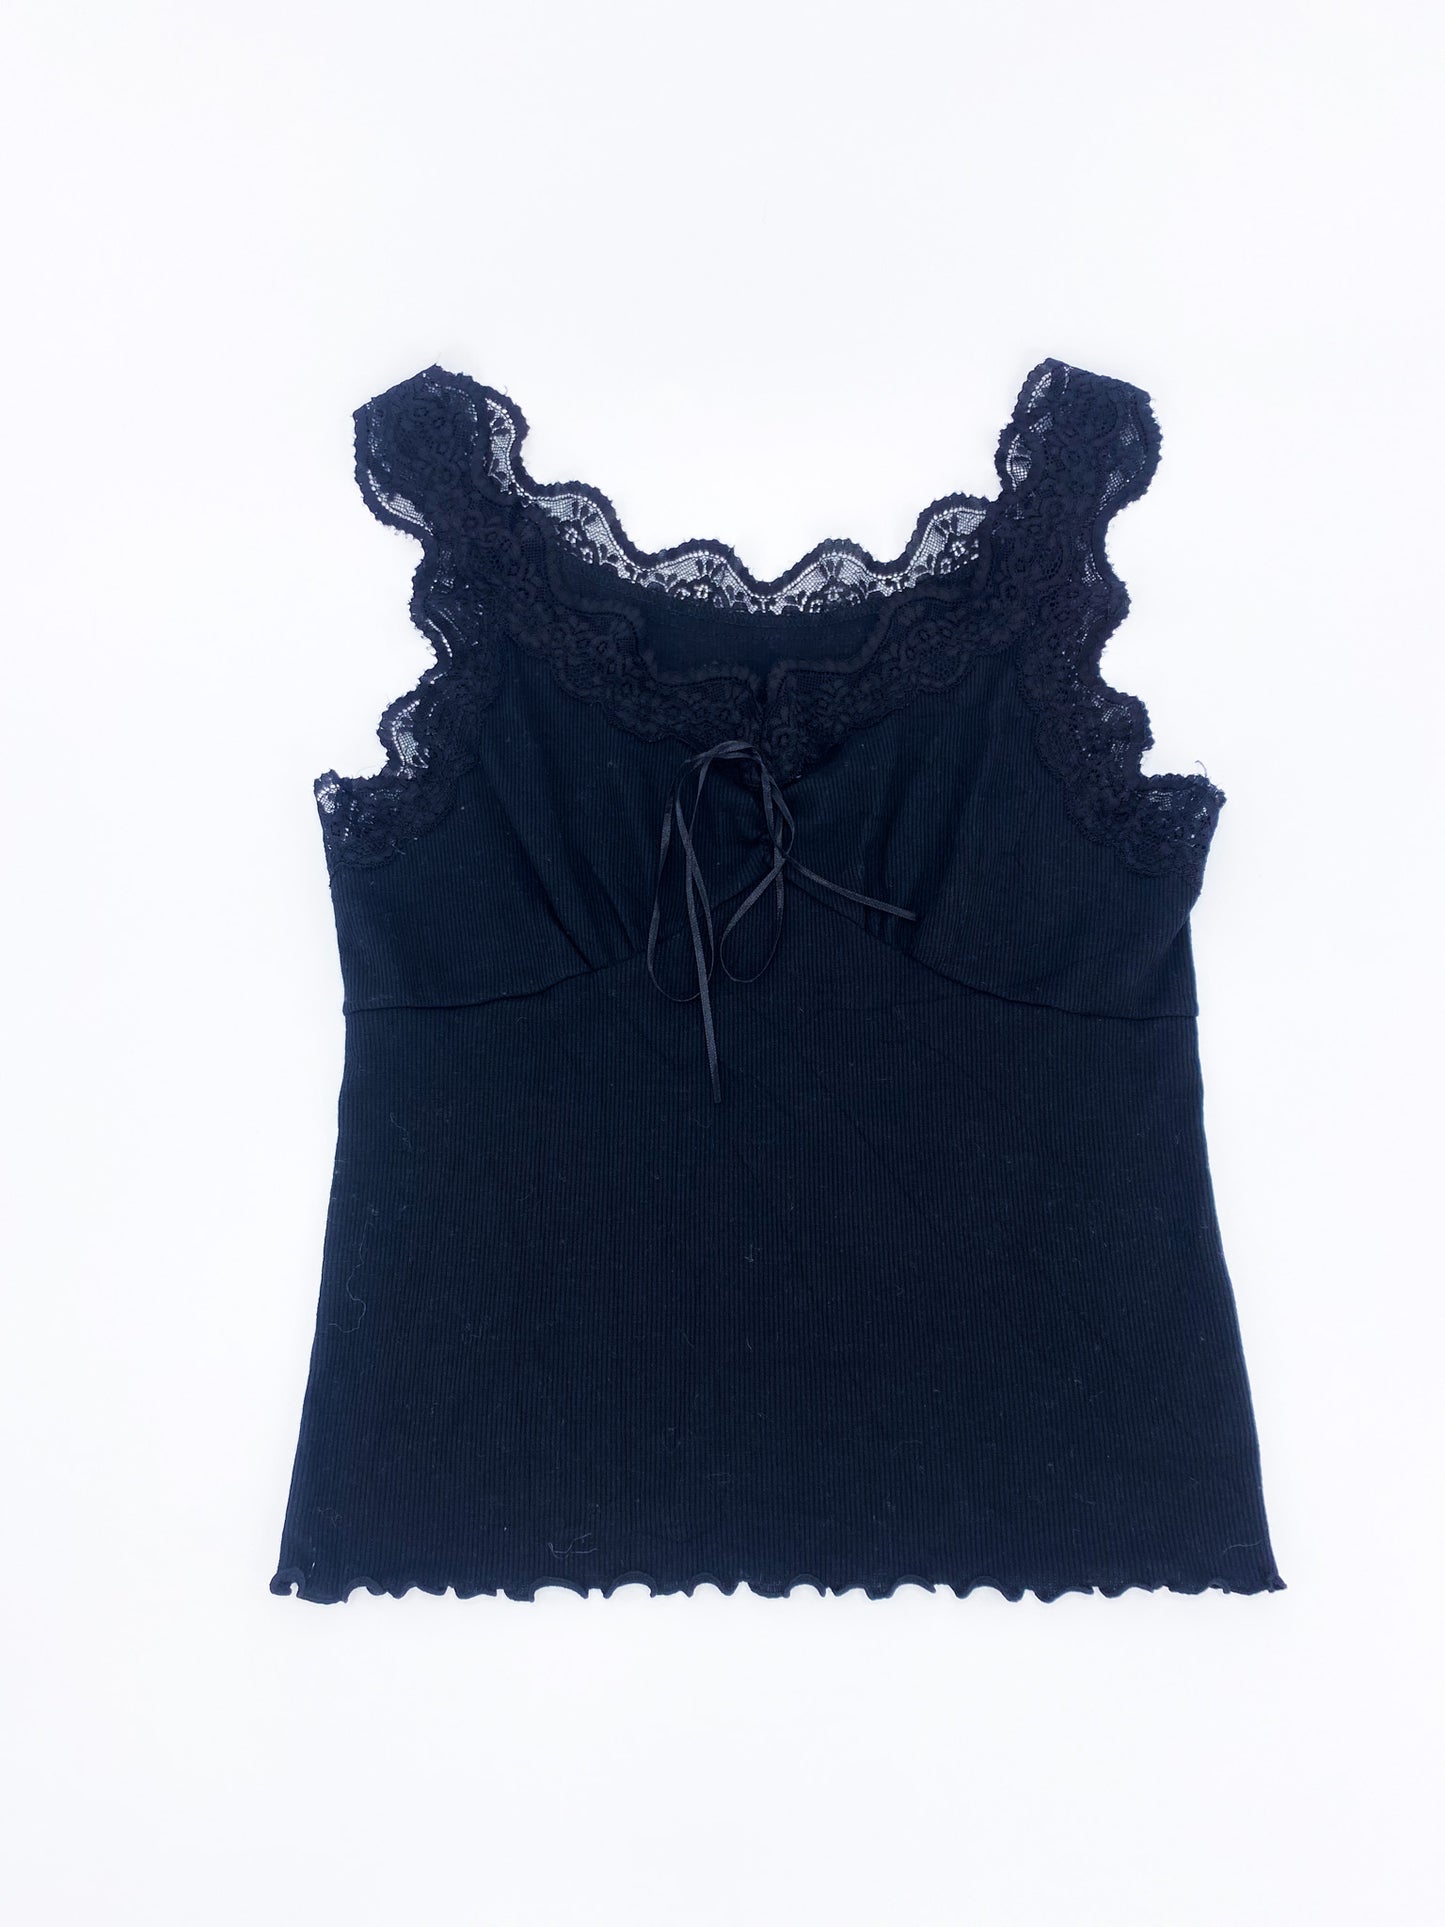 Vintage 00's Black Lace Singlet - S